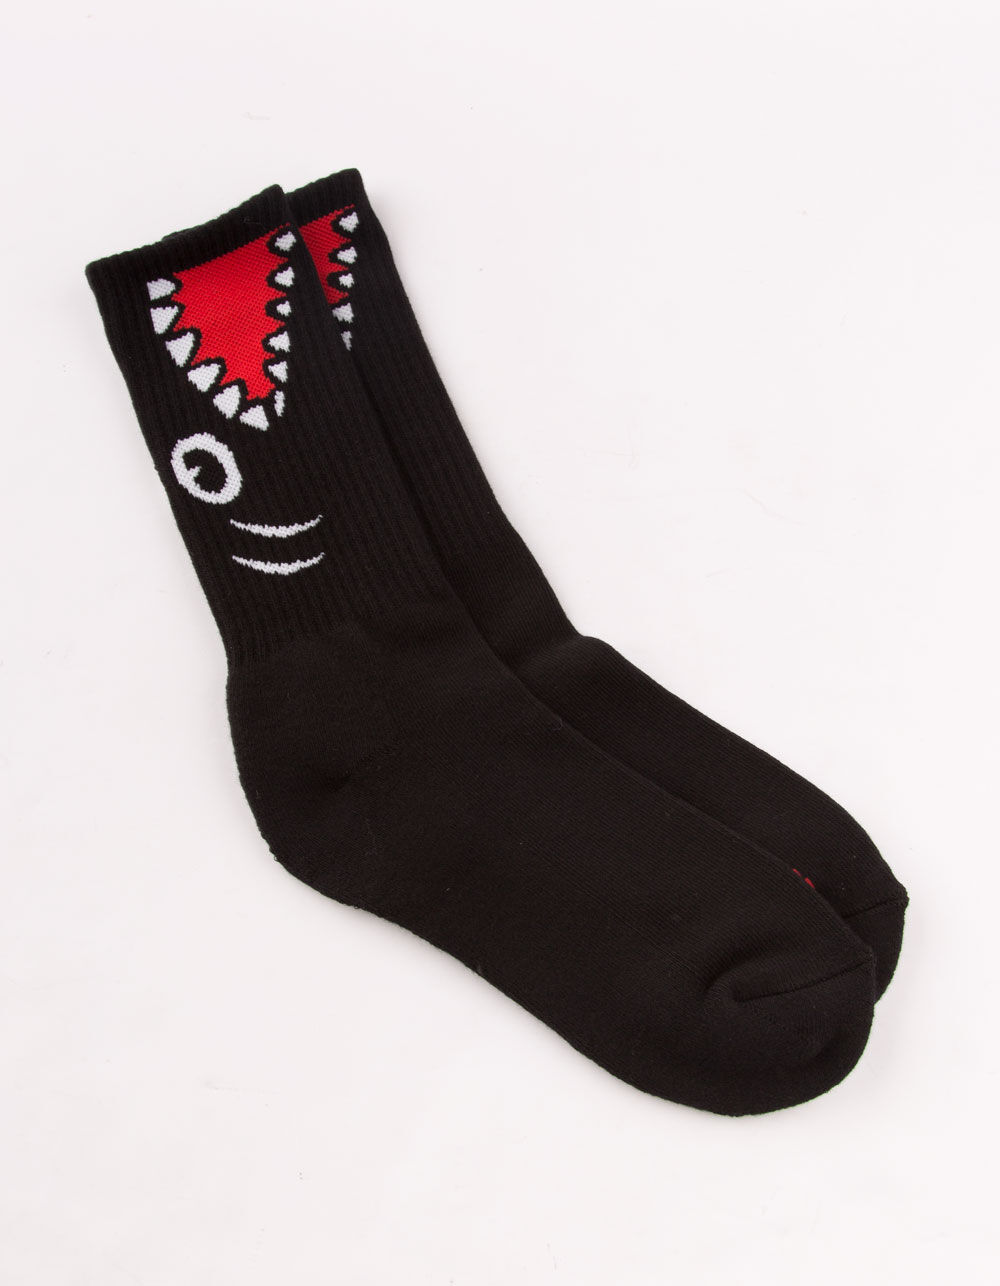 VANS Shark Week Boys Socks - BLACK COMBO |